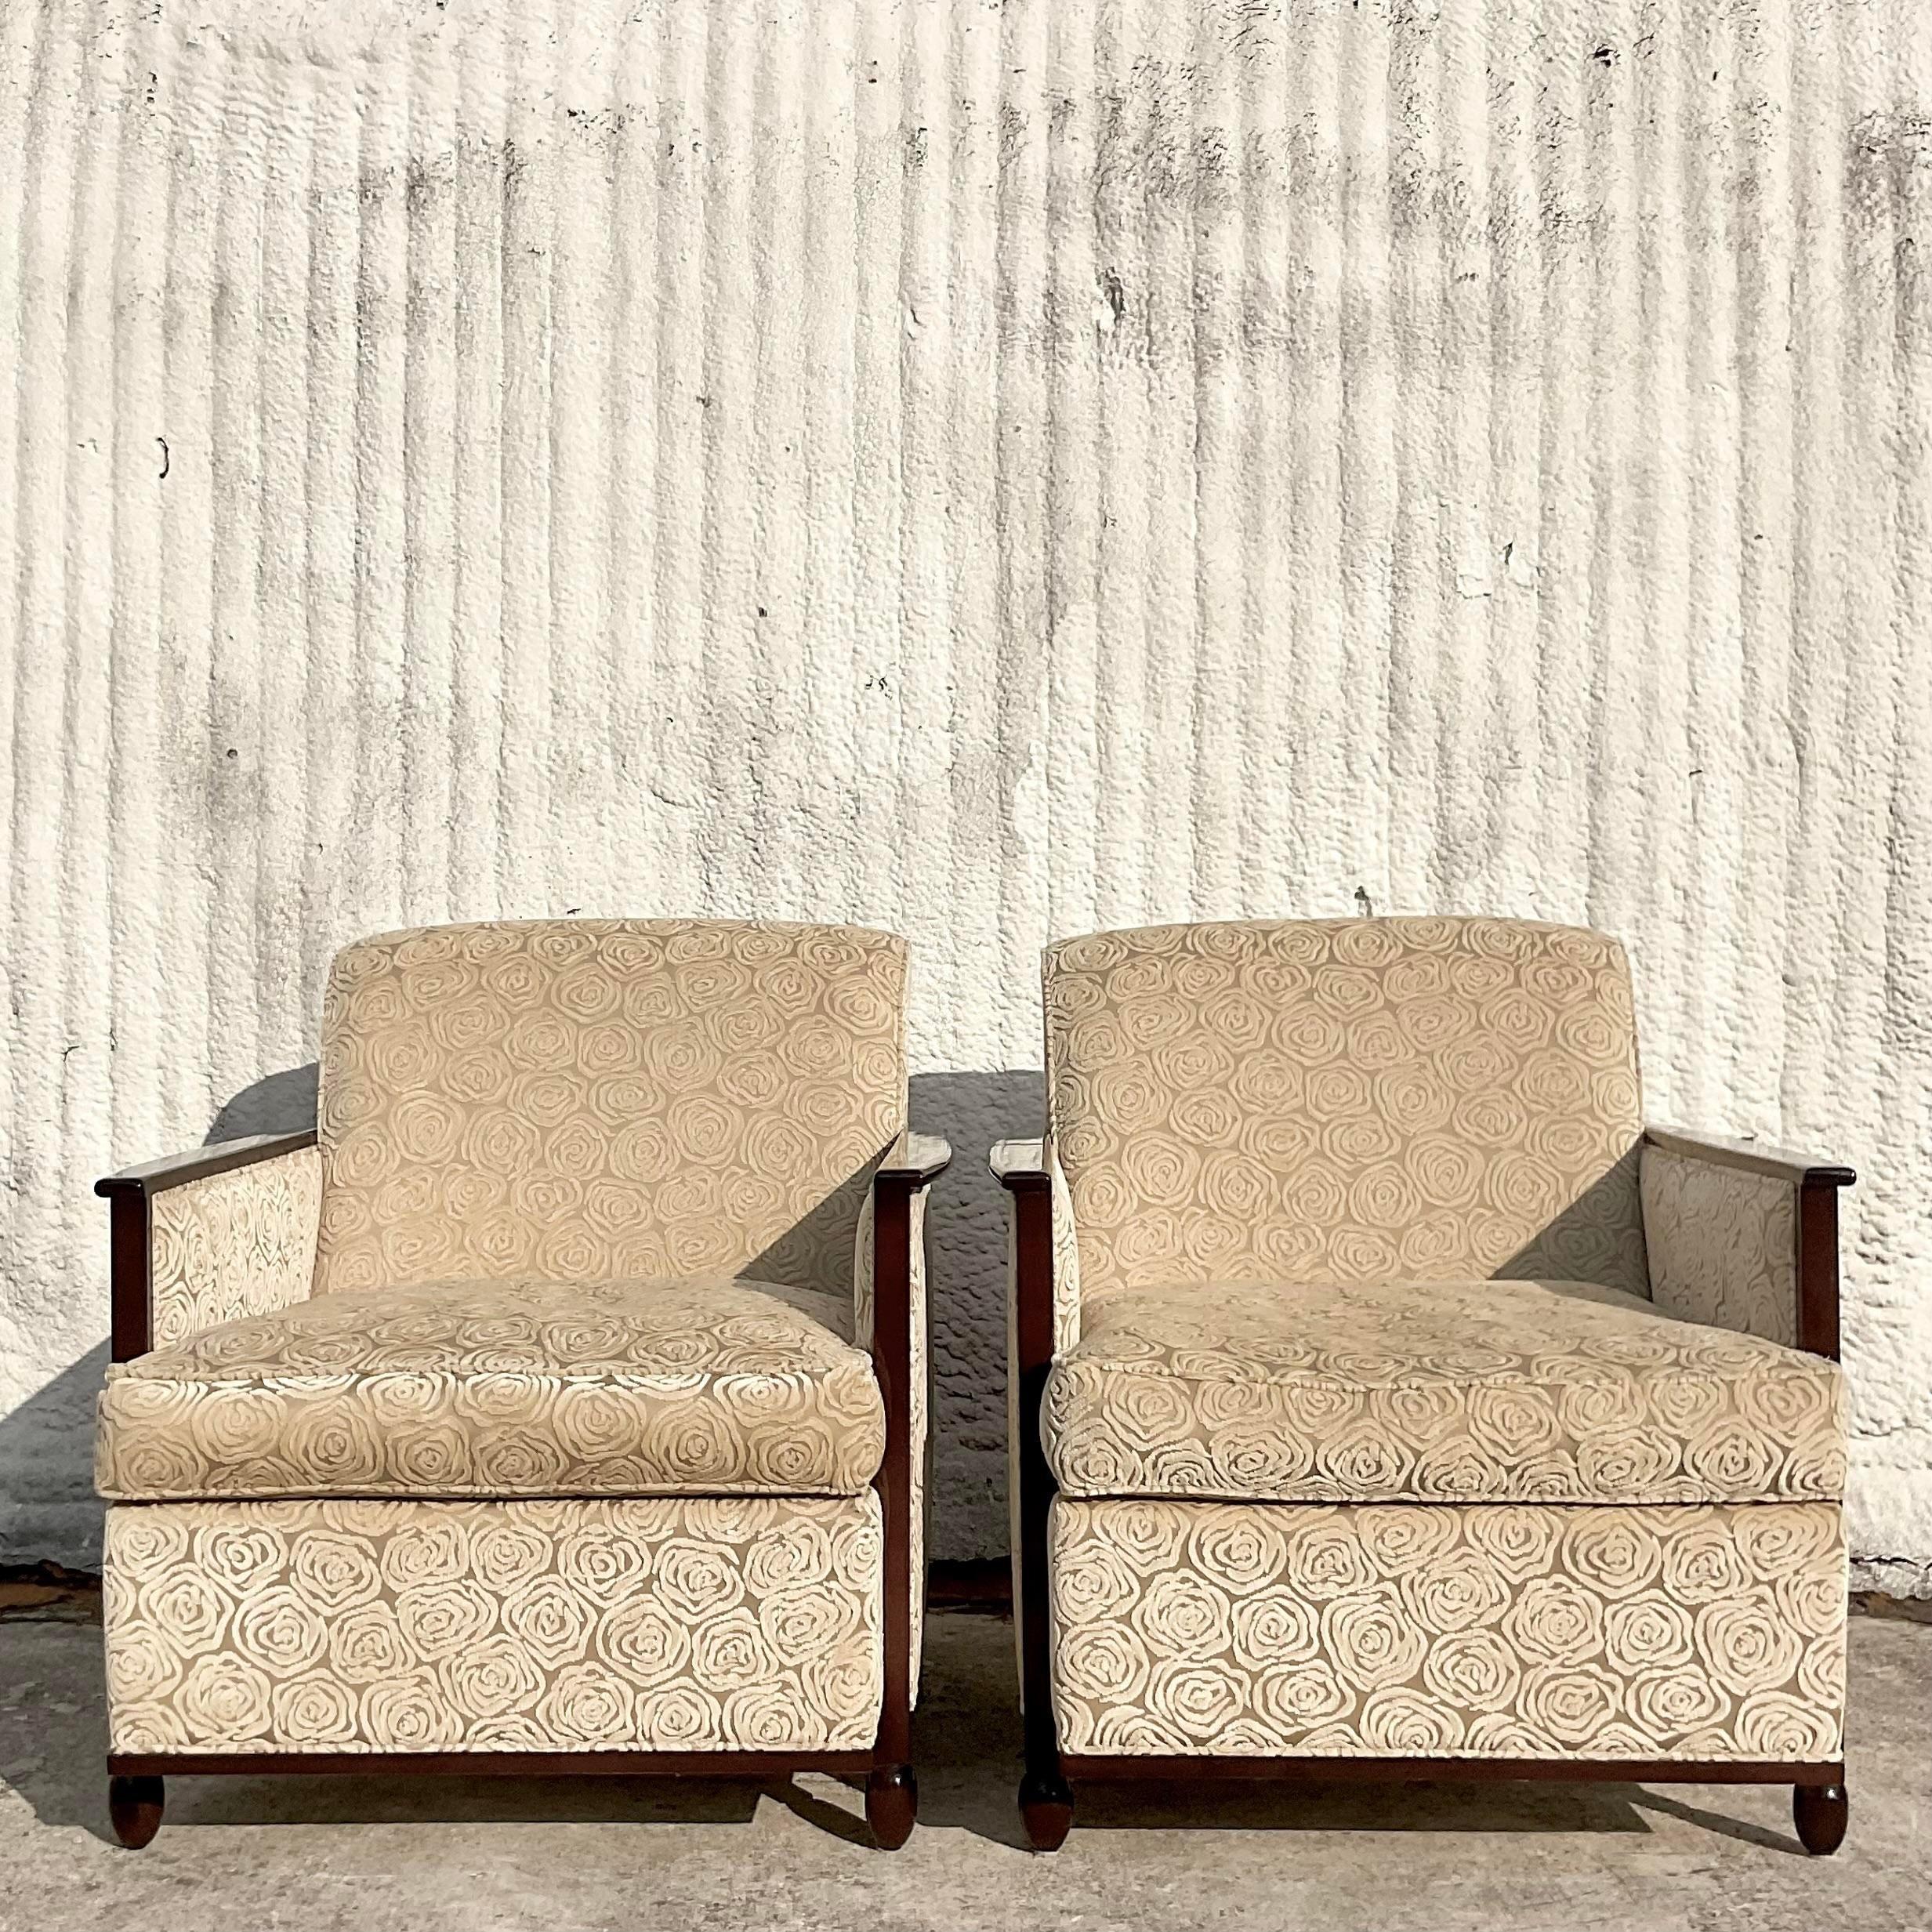 Vintage Custom Geoffrey Bradfield Deco Lounge Chairs - a Pair For Sale 3